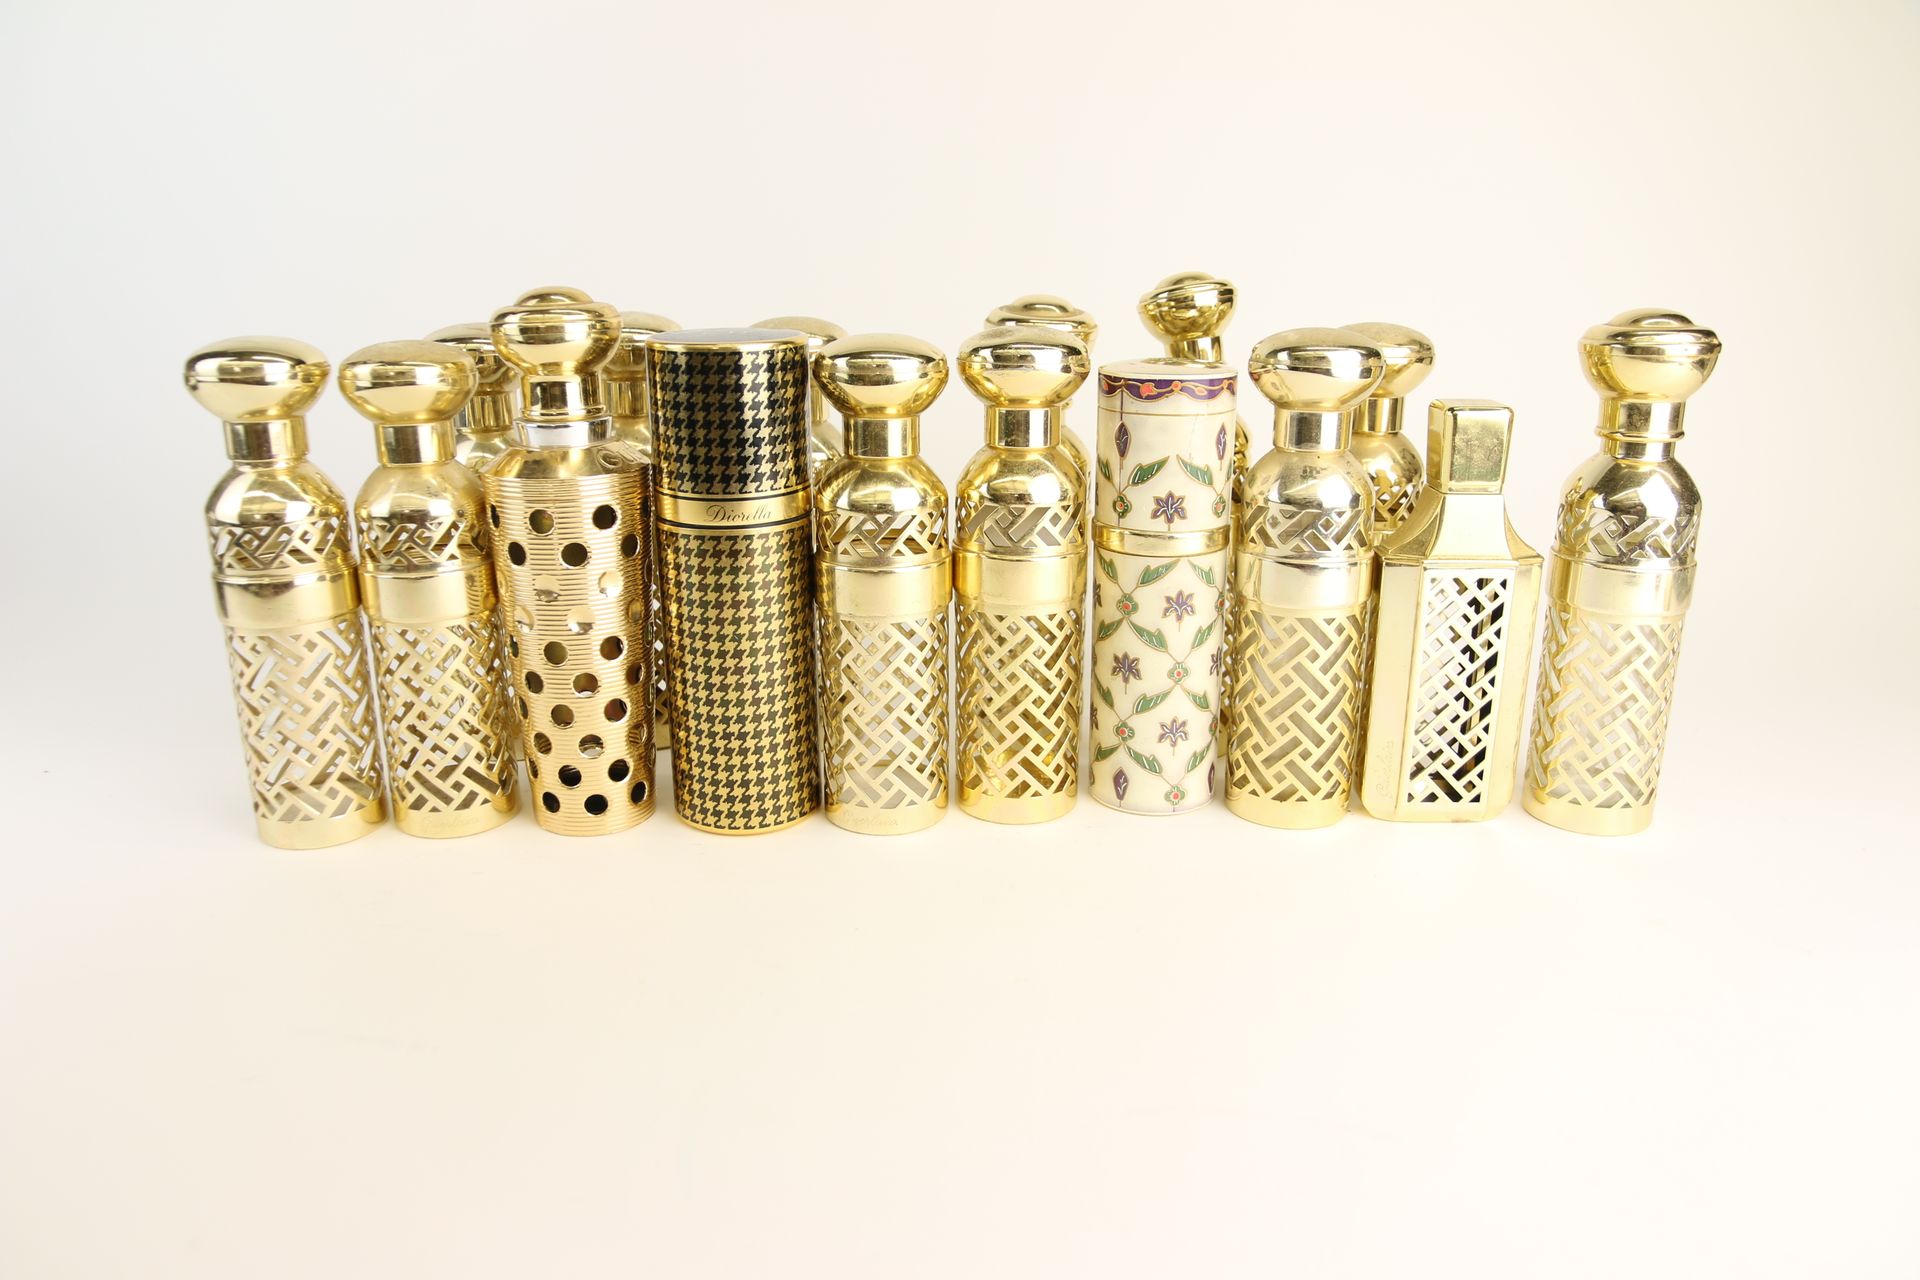 Guerlain 娇兰 
本拍品由16个瓶子组成，其中14个是镀金的Zamac，2个是铬石膏的金属，其中一个是Christian Dior家的。
(空)